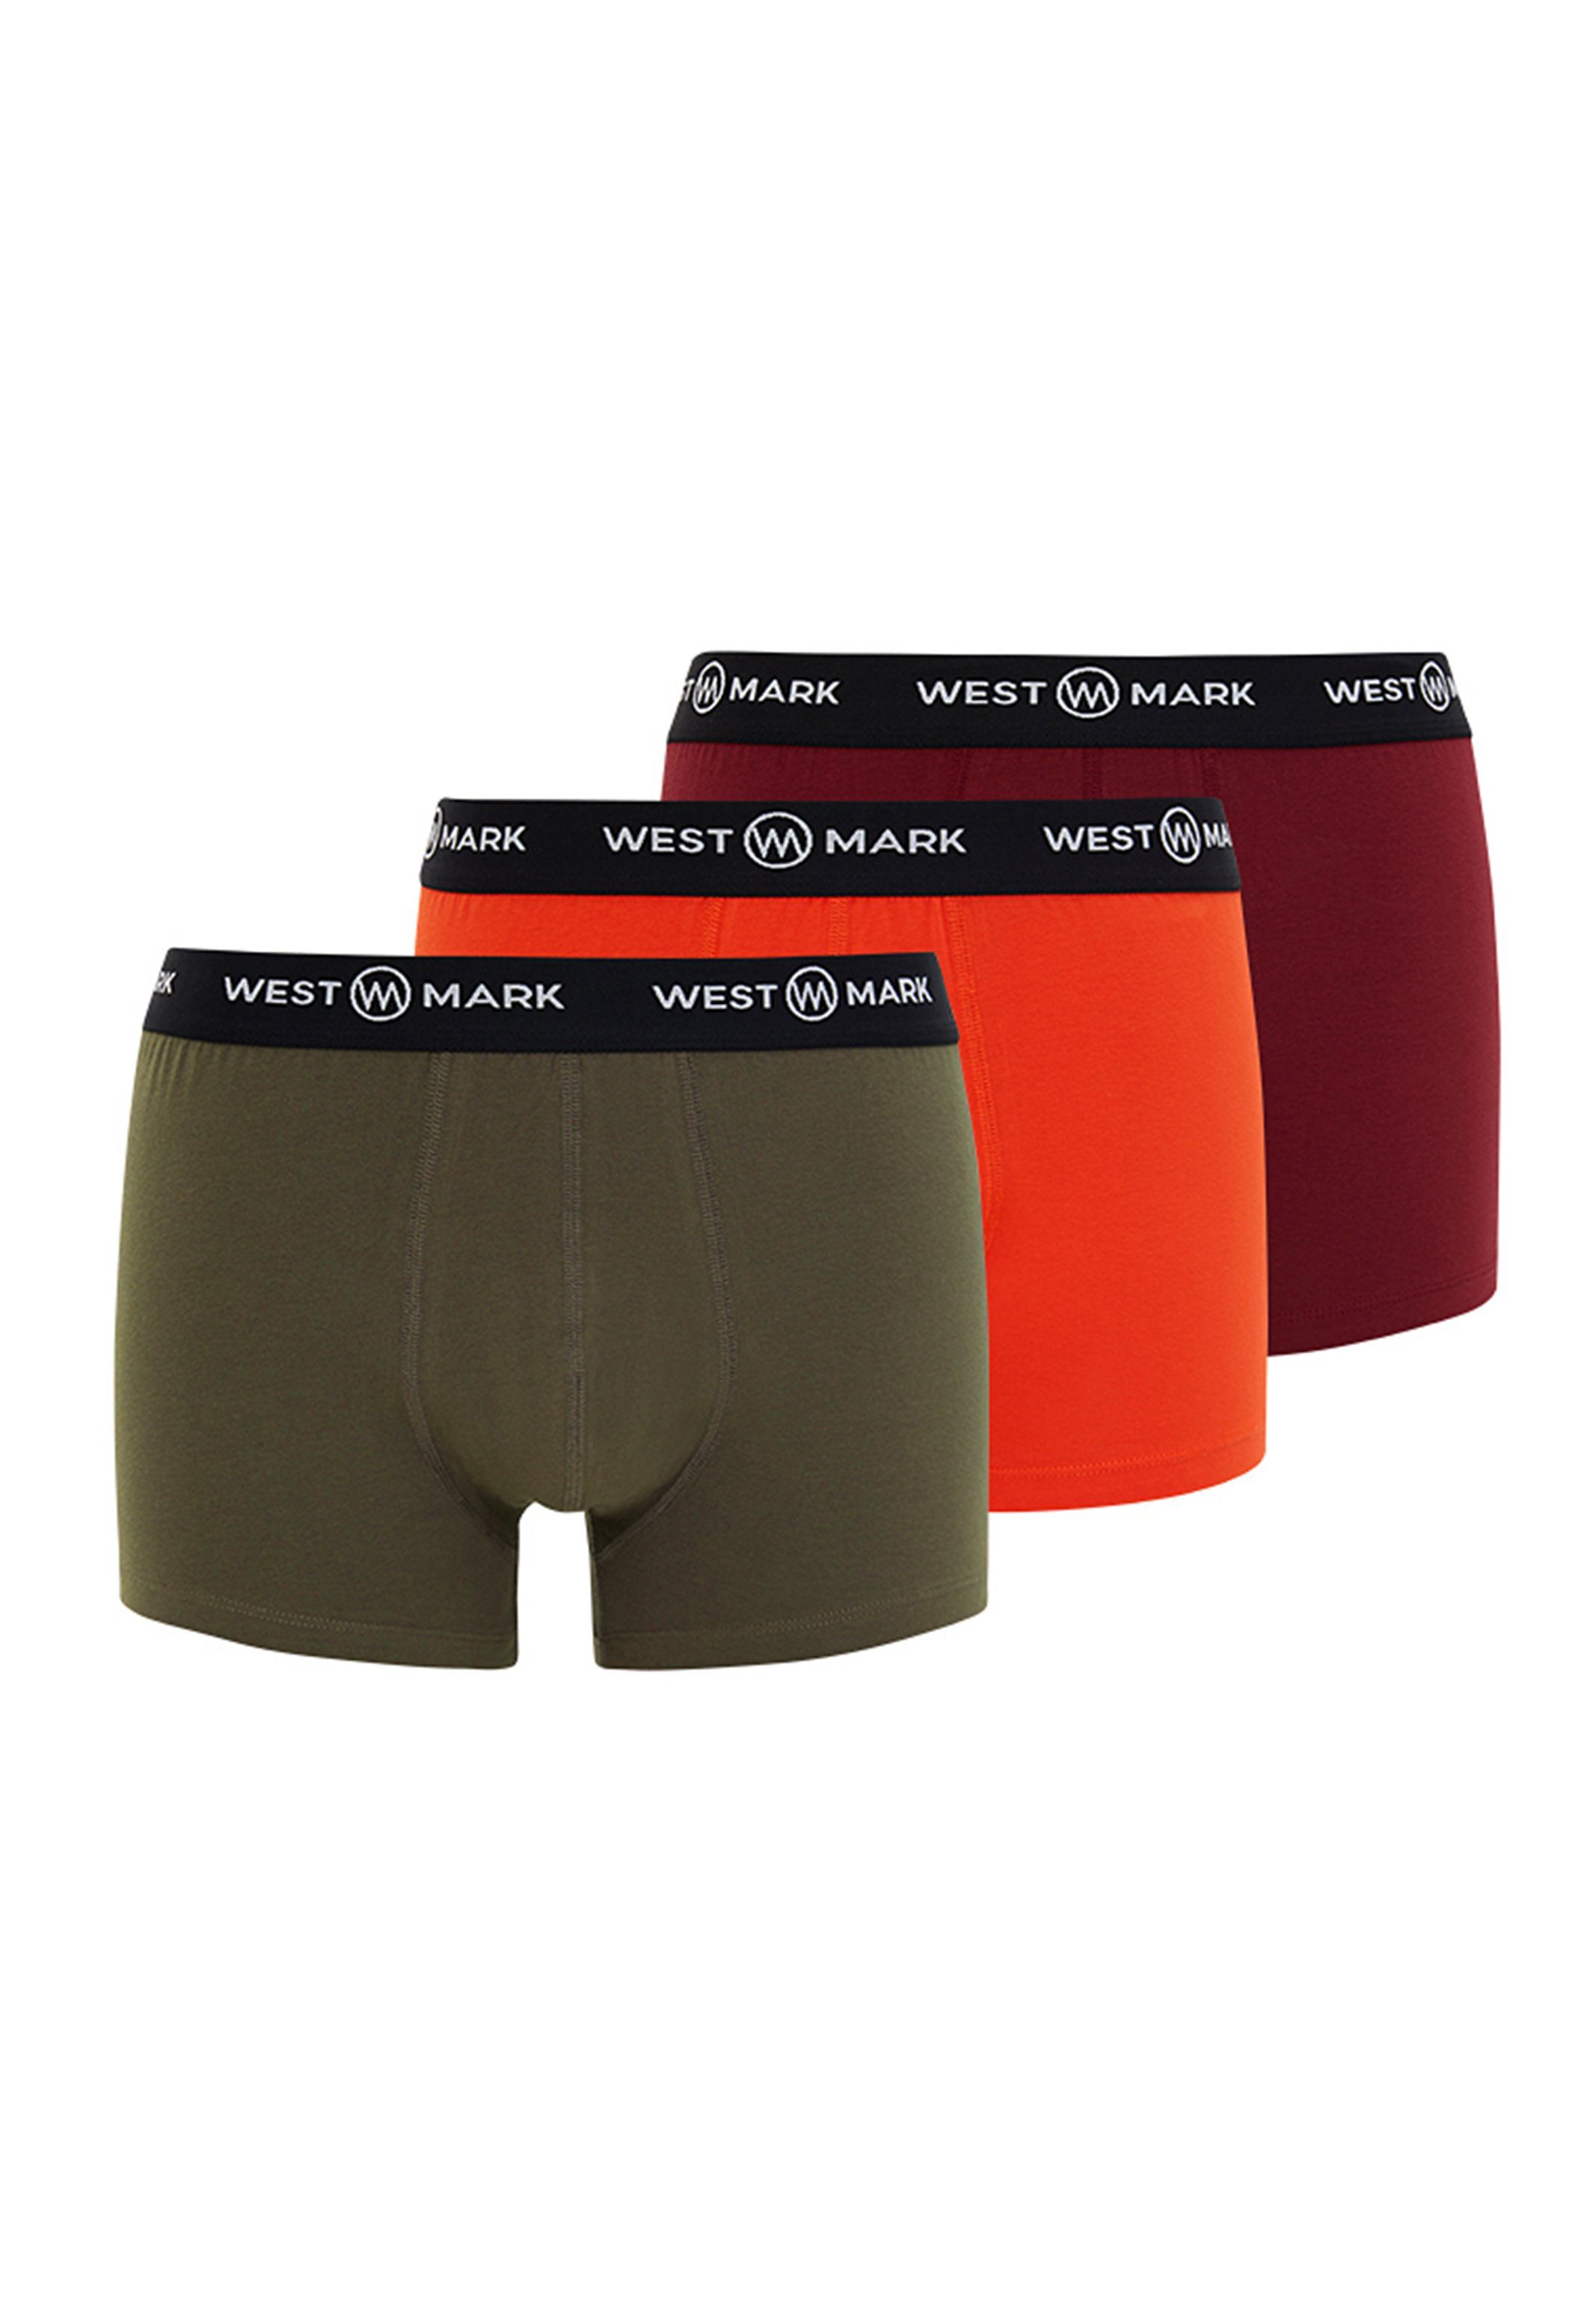 Eingriff Bordeaux Retro Boxer / - LONDON - Baumwolle / 3-St) 3er Pack - Khaki Ohne Orange Pant WESTMARK (Spar-Set, Retro / Oscar Short